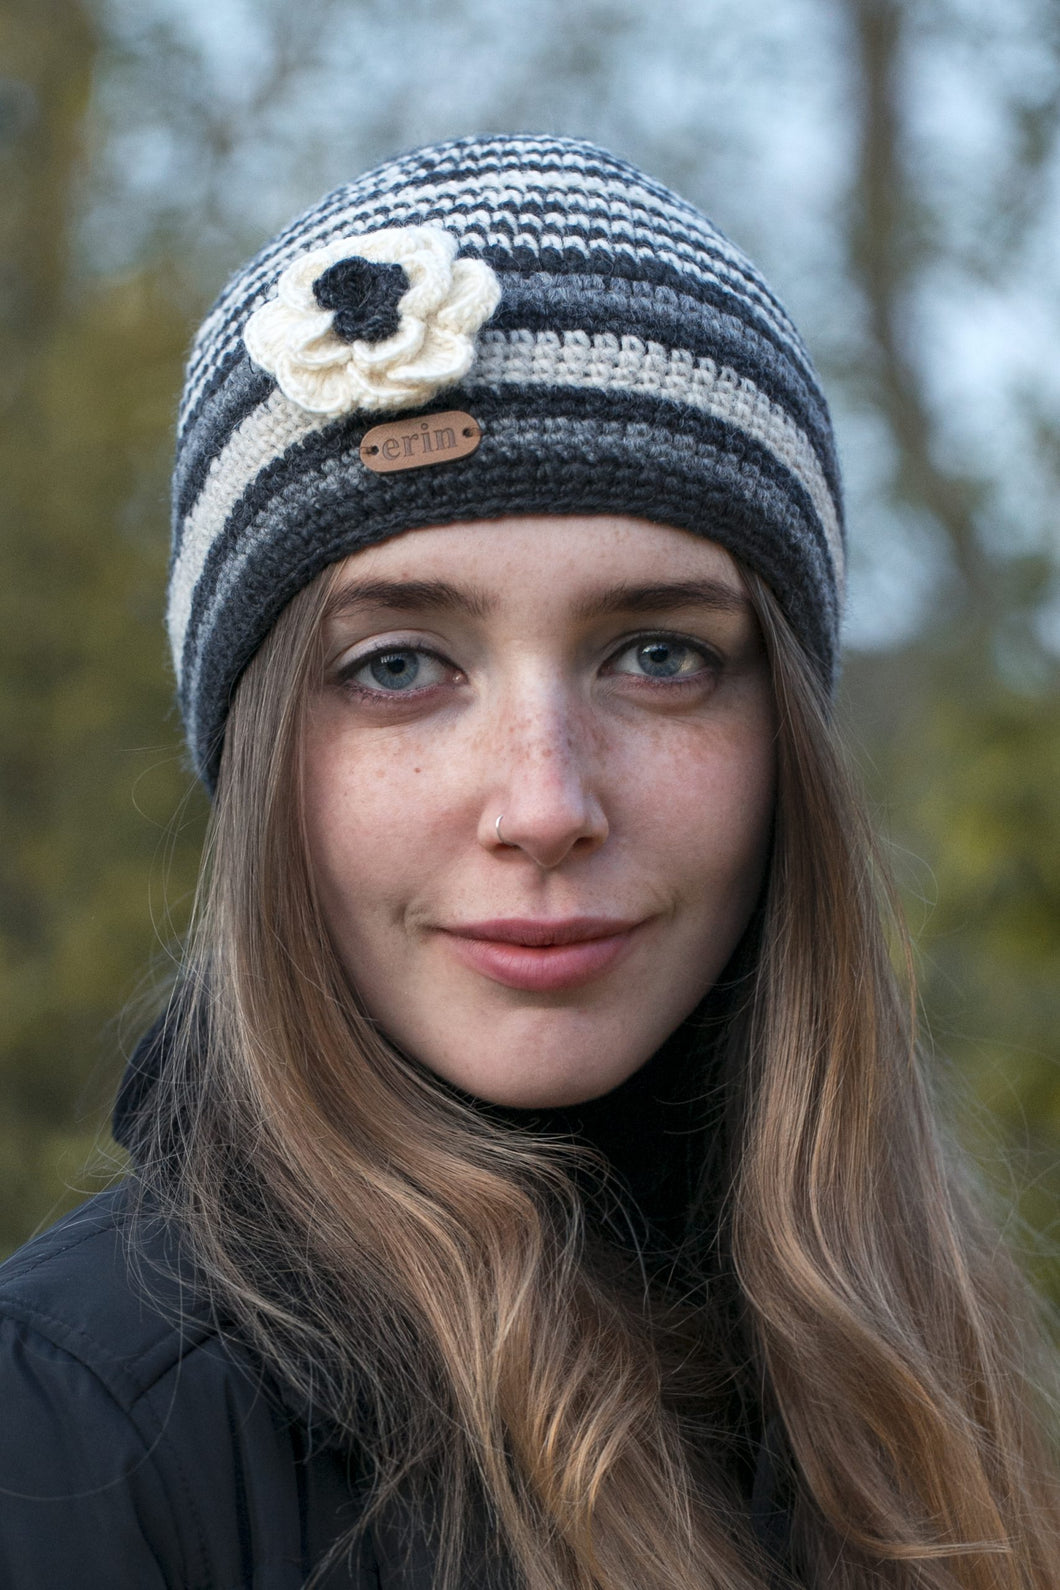 Crochet cap with flower